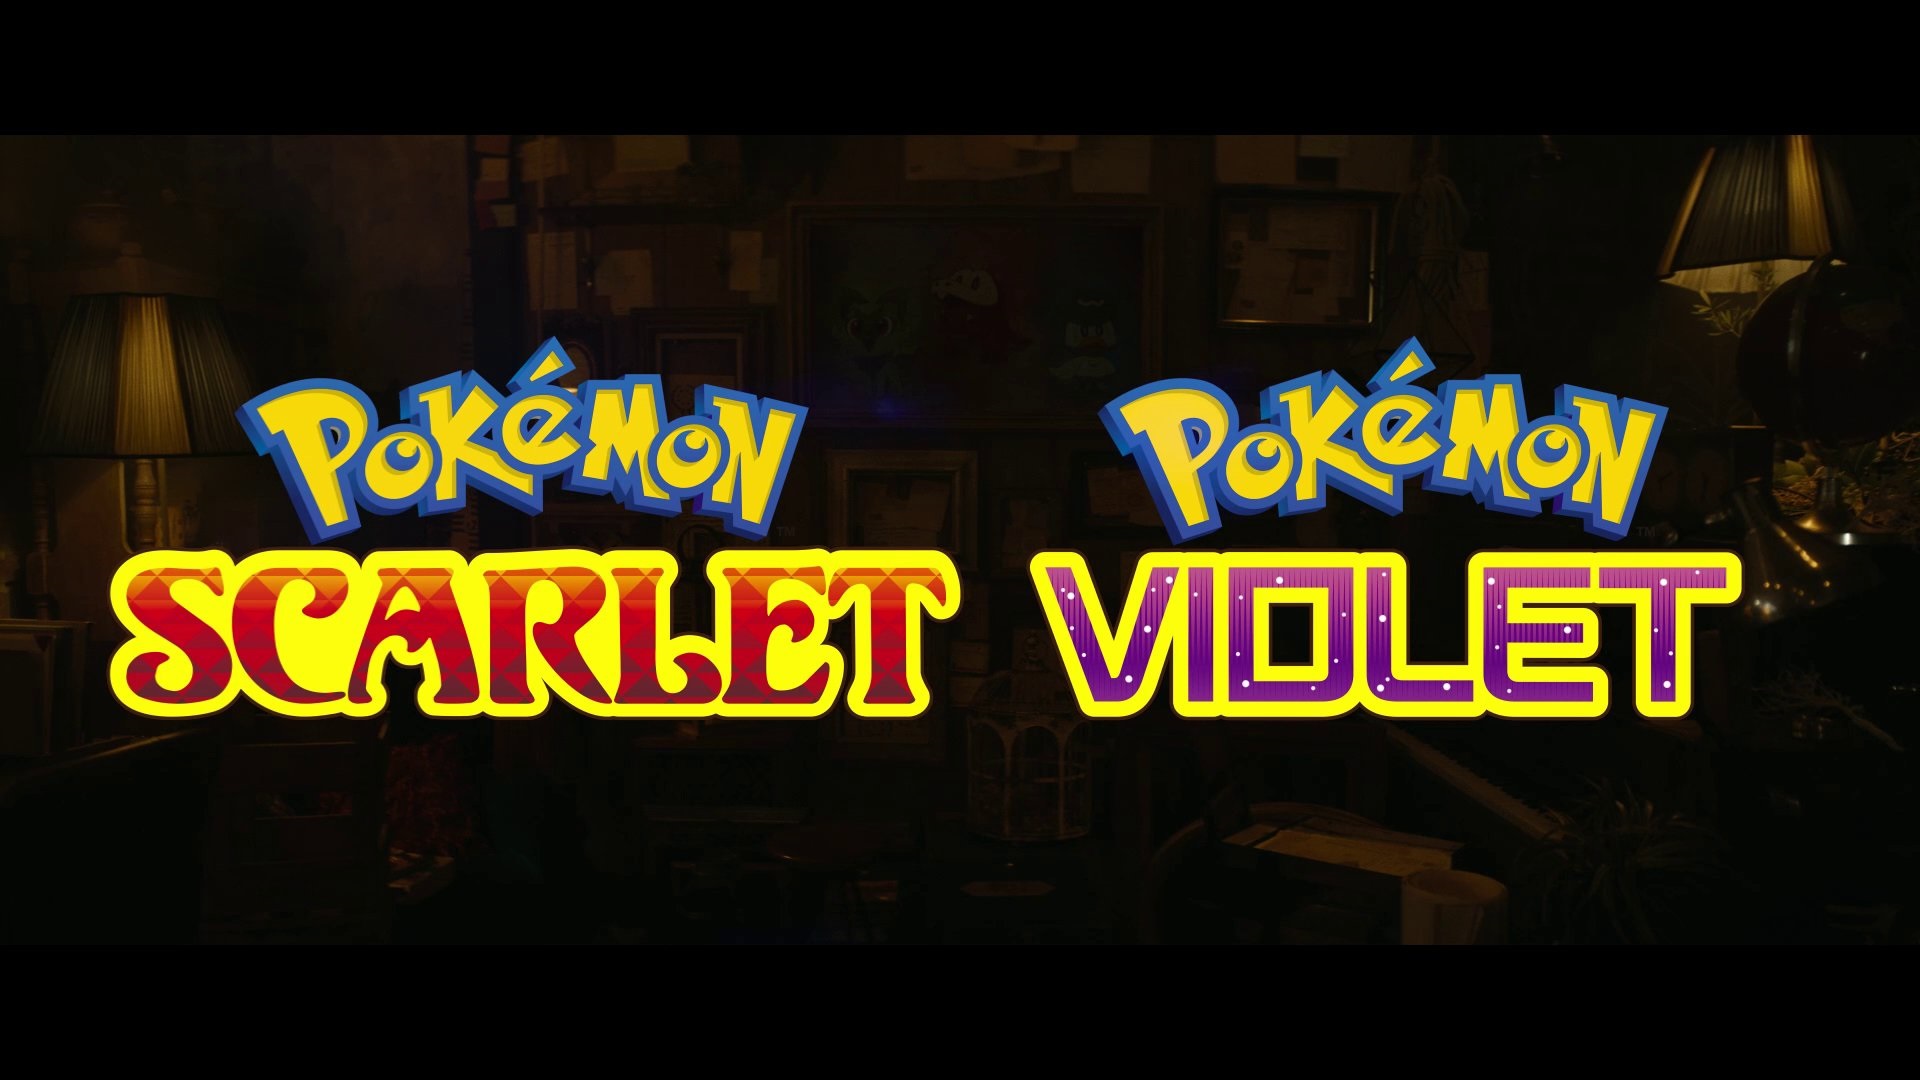 Pokemon Scarlet and Violet trailer